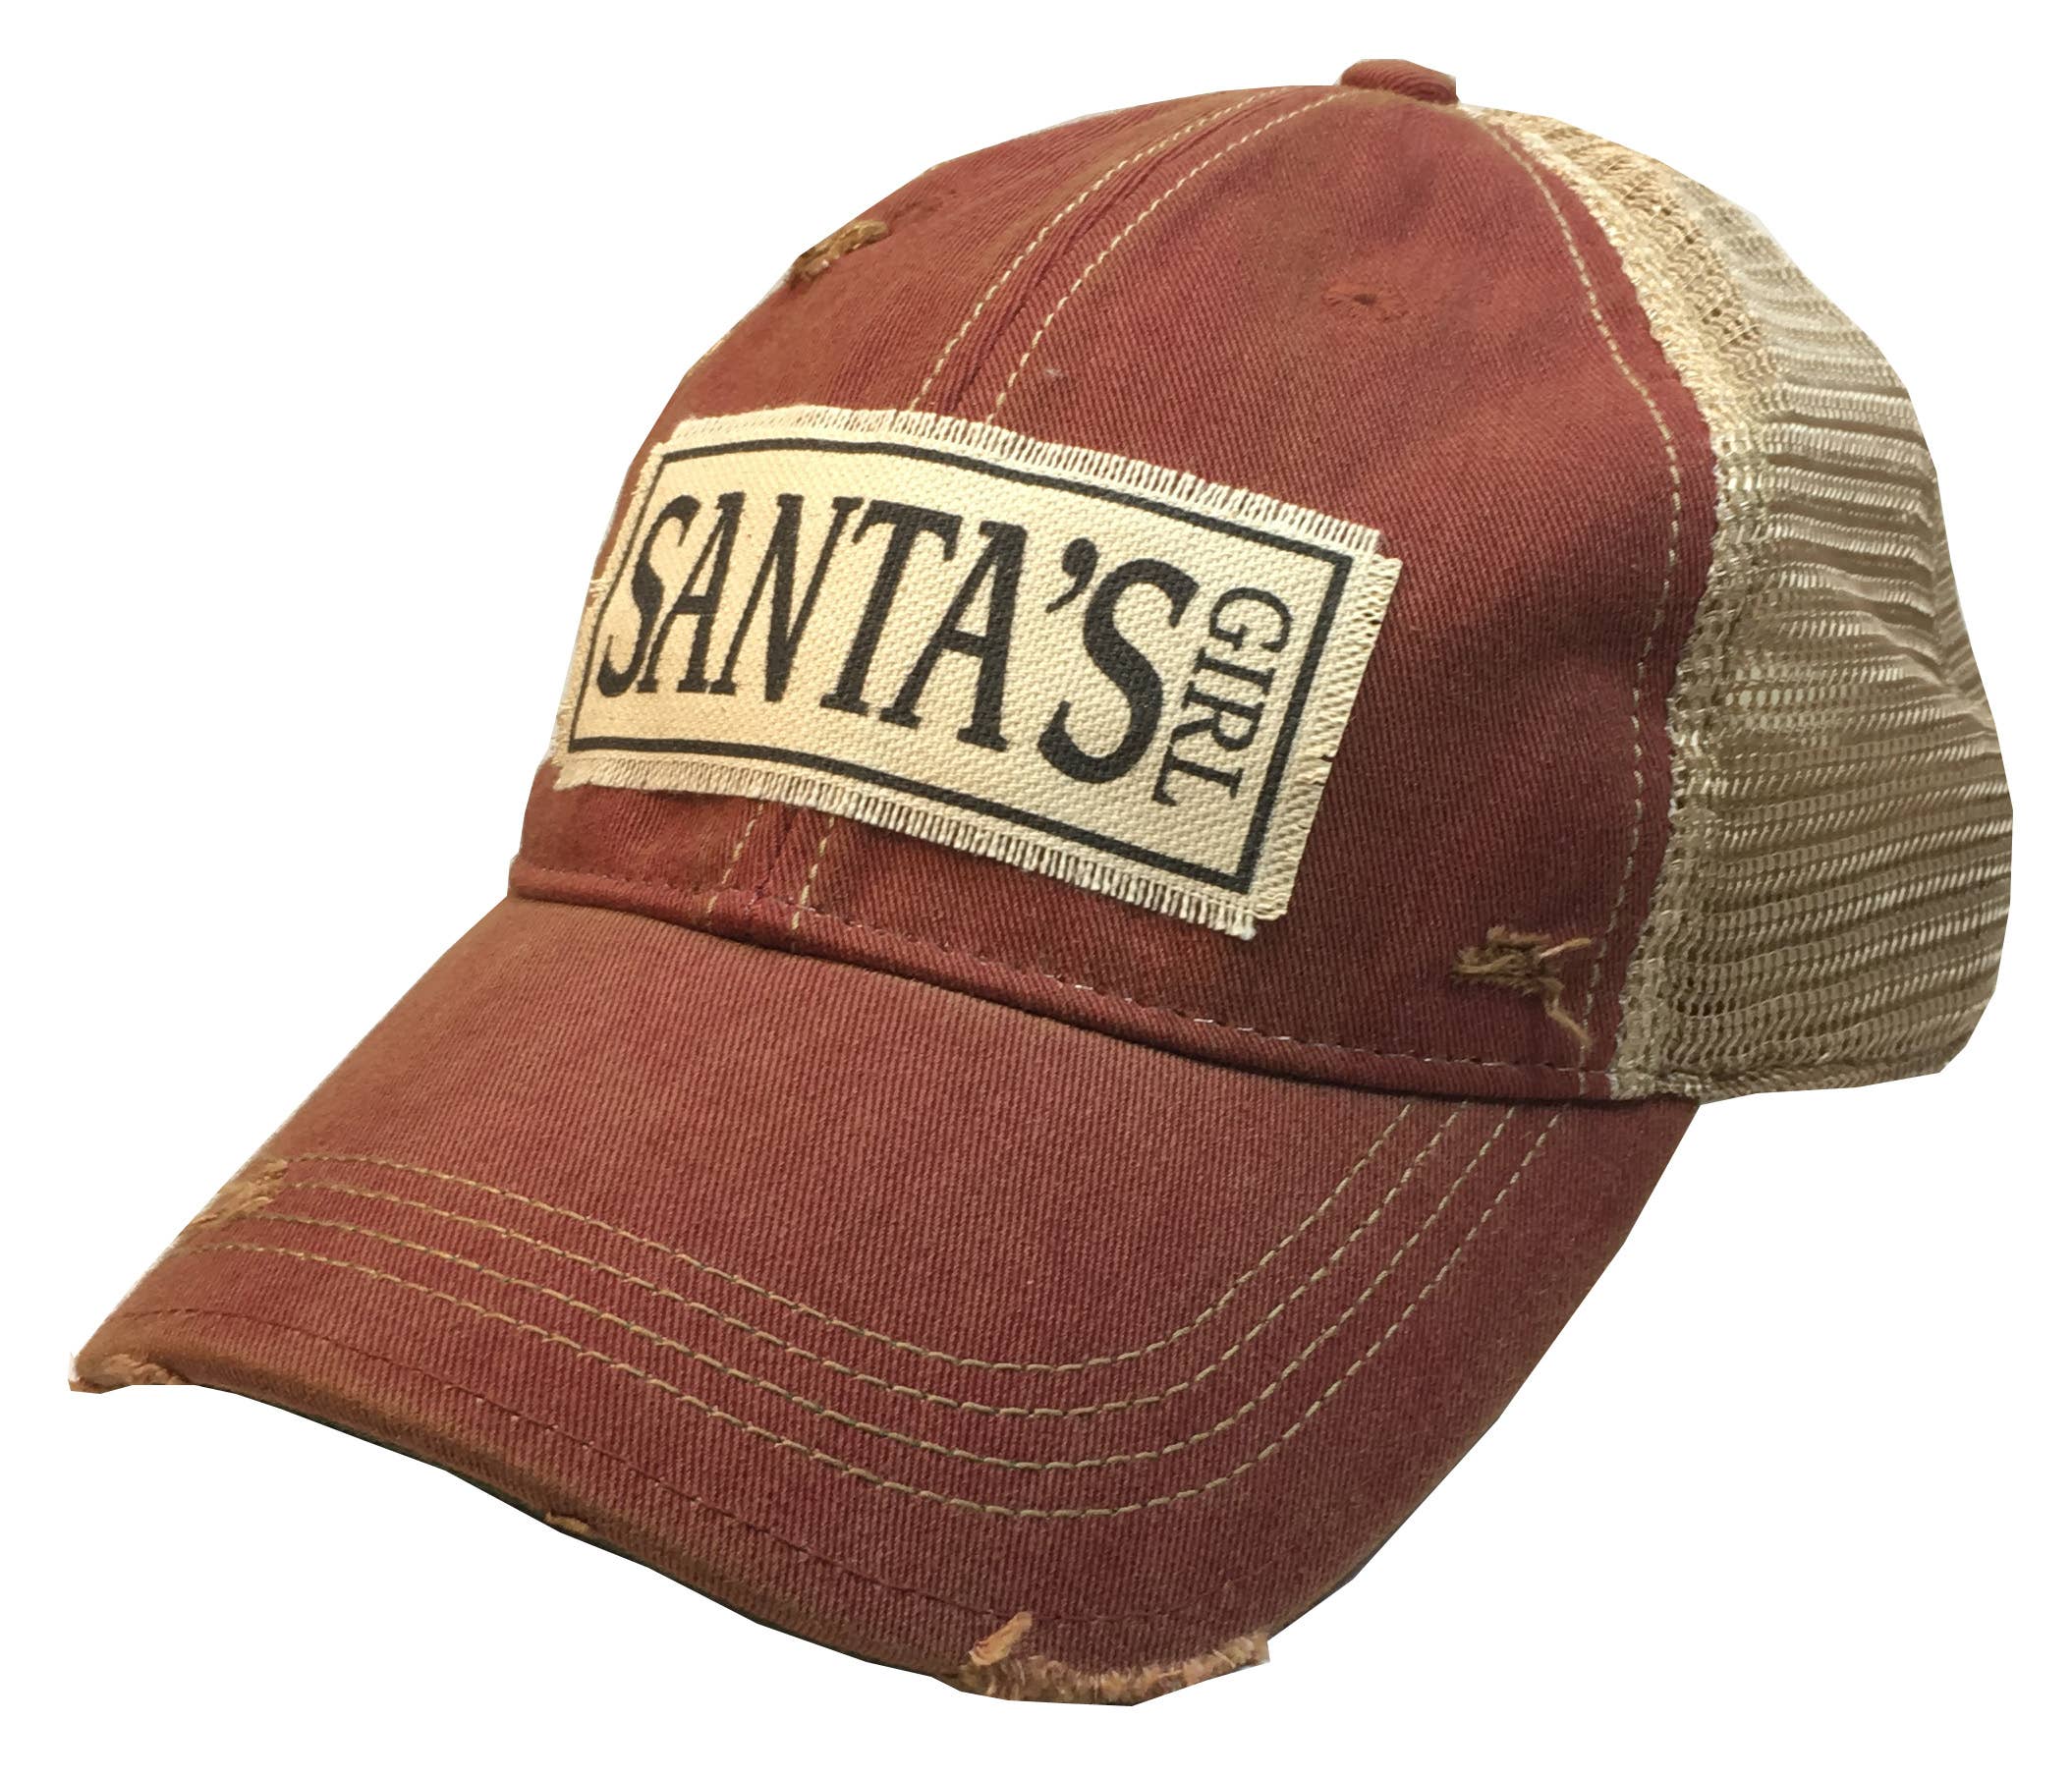 Santa's Girl Trucker Hat Baseball Cap